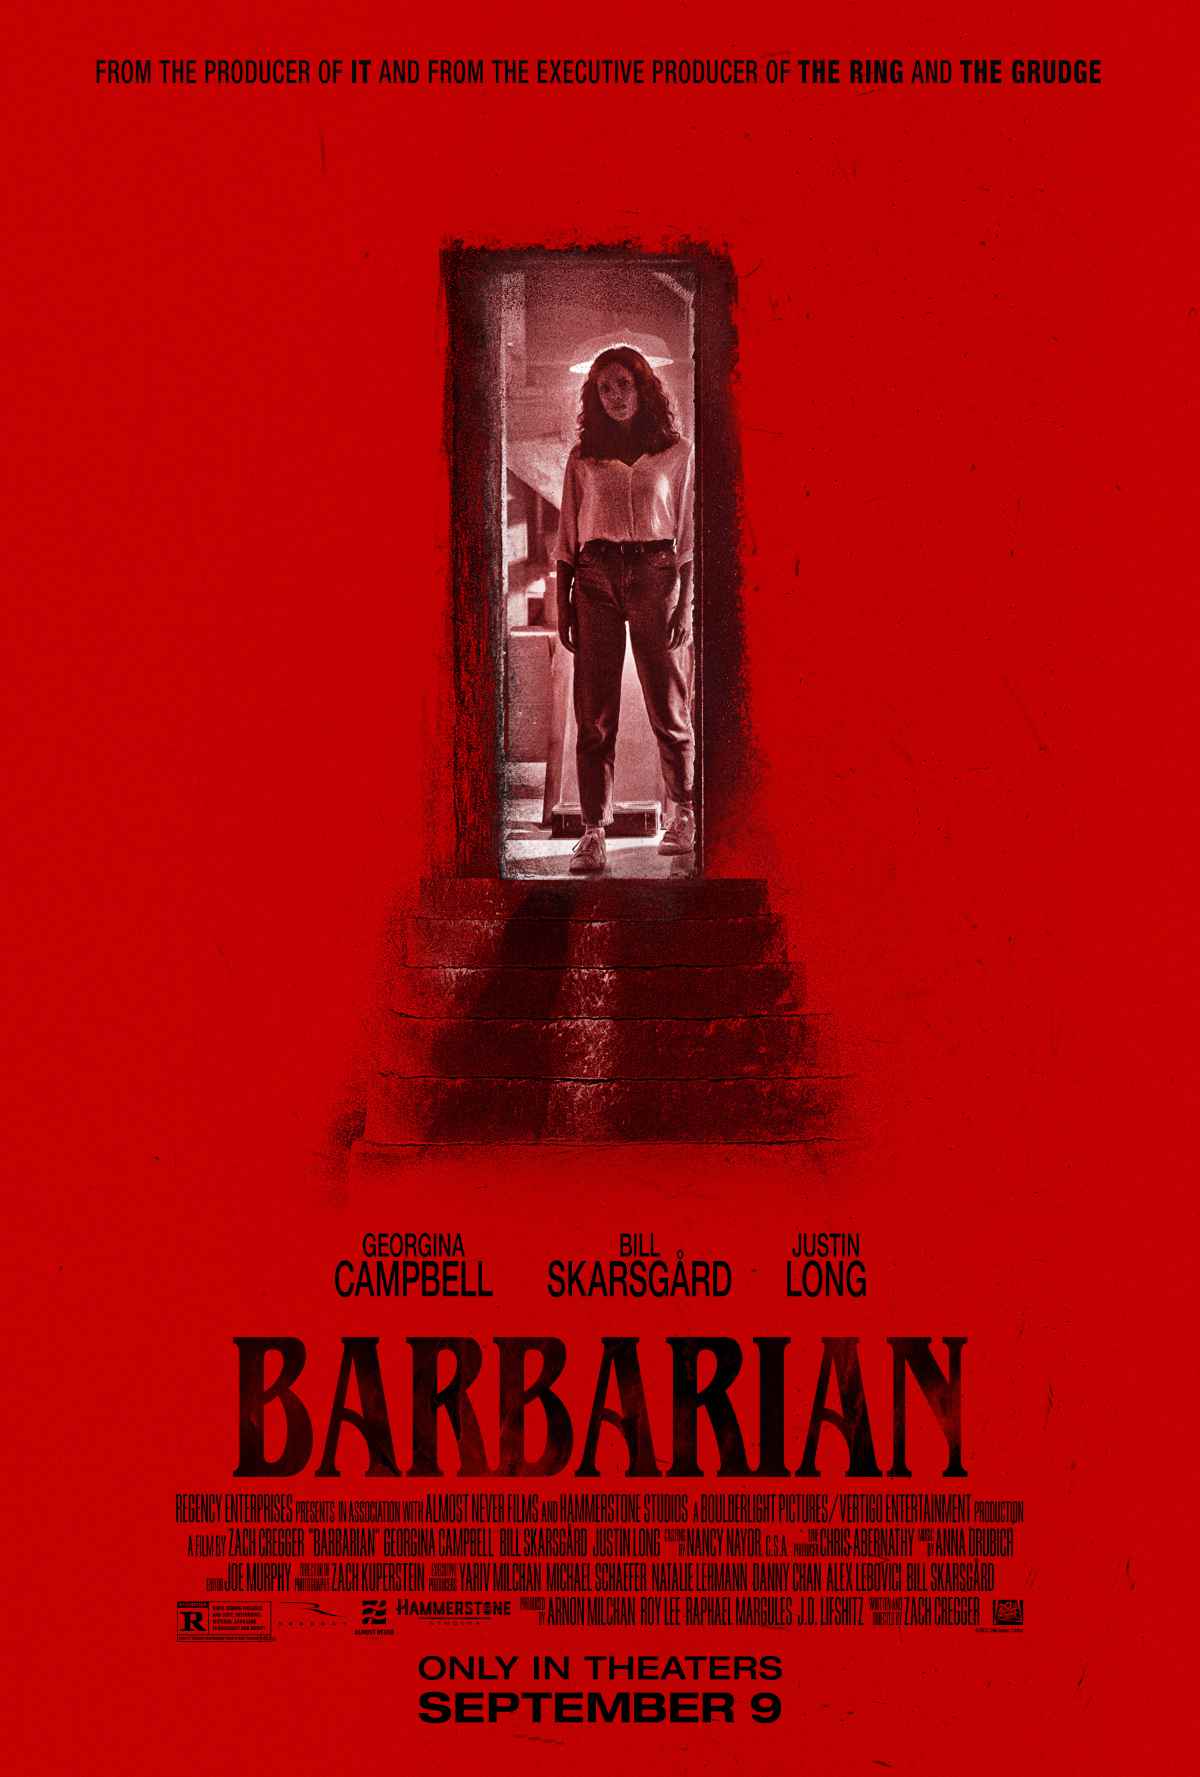 Barbarian Review